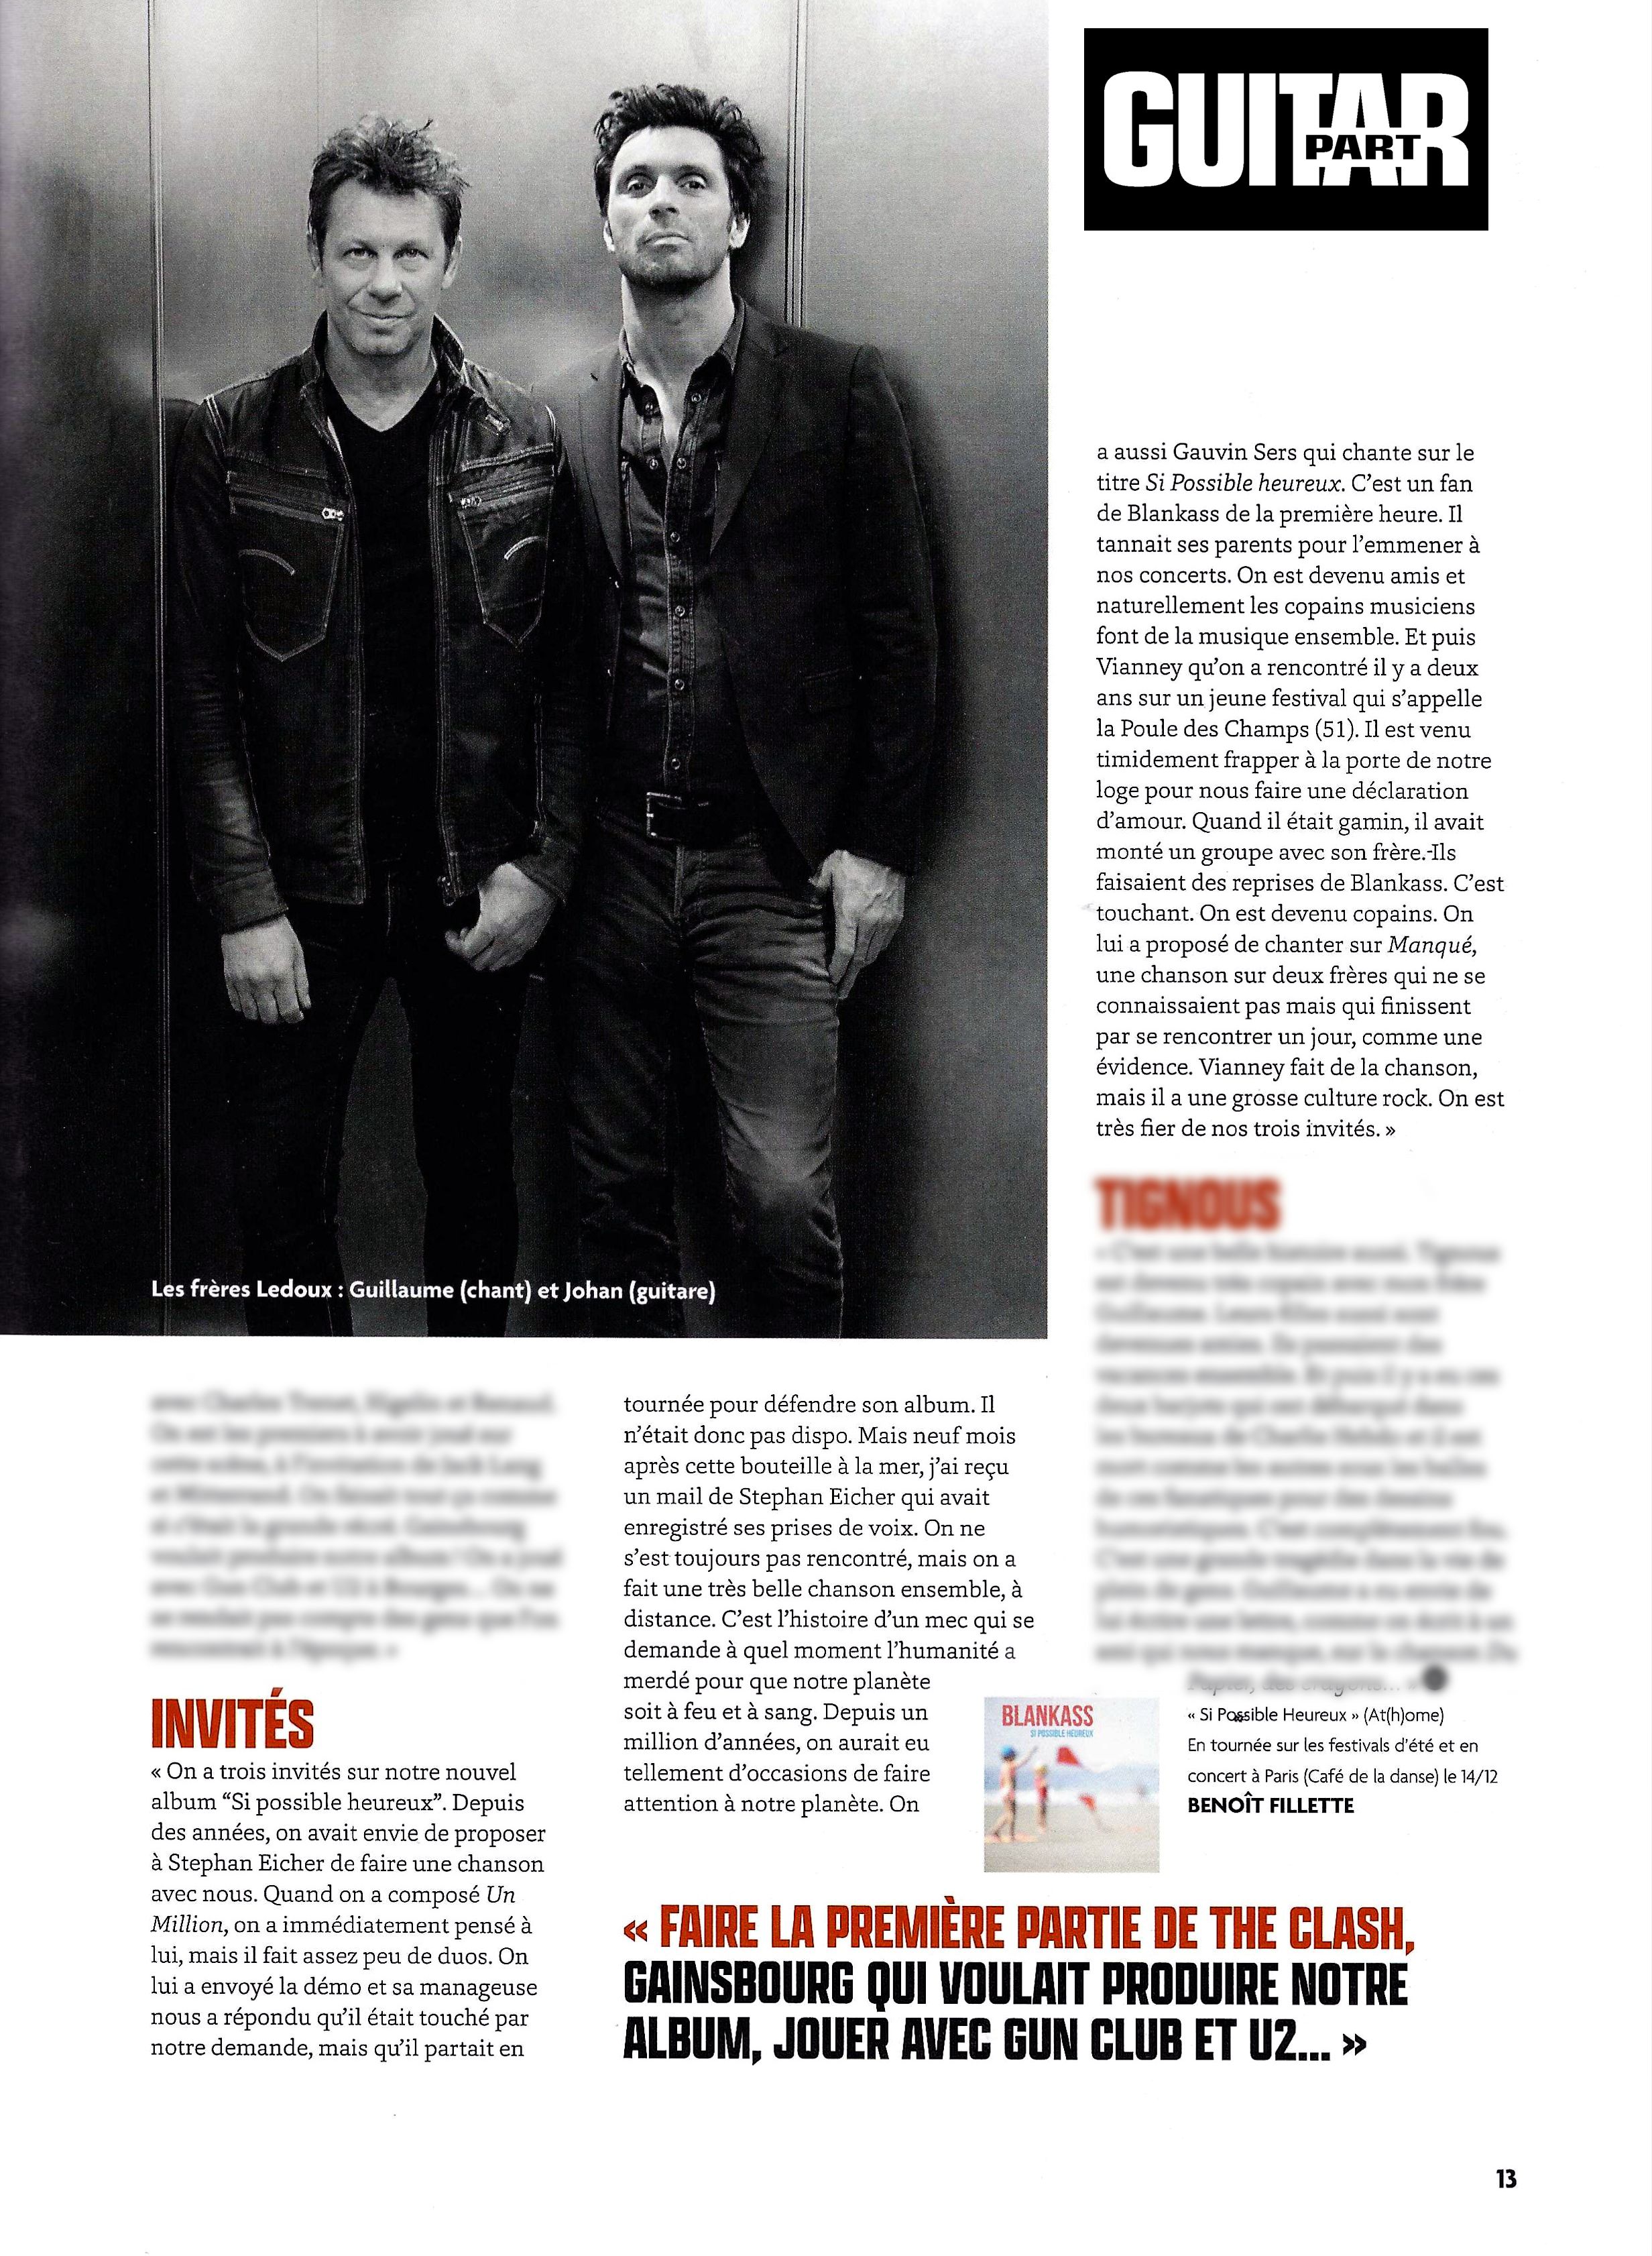 Article Guitar Part Magazine - Interview